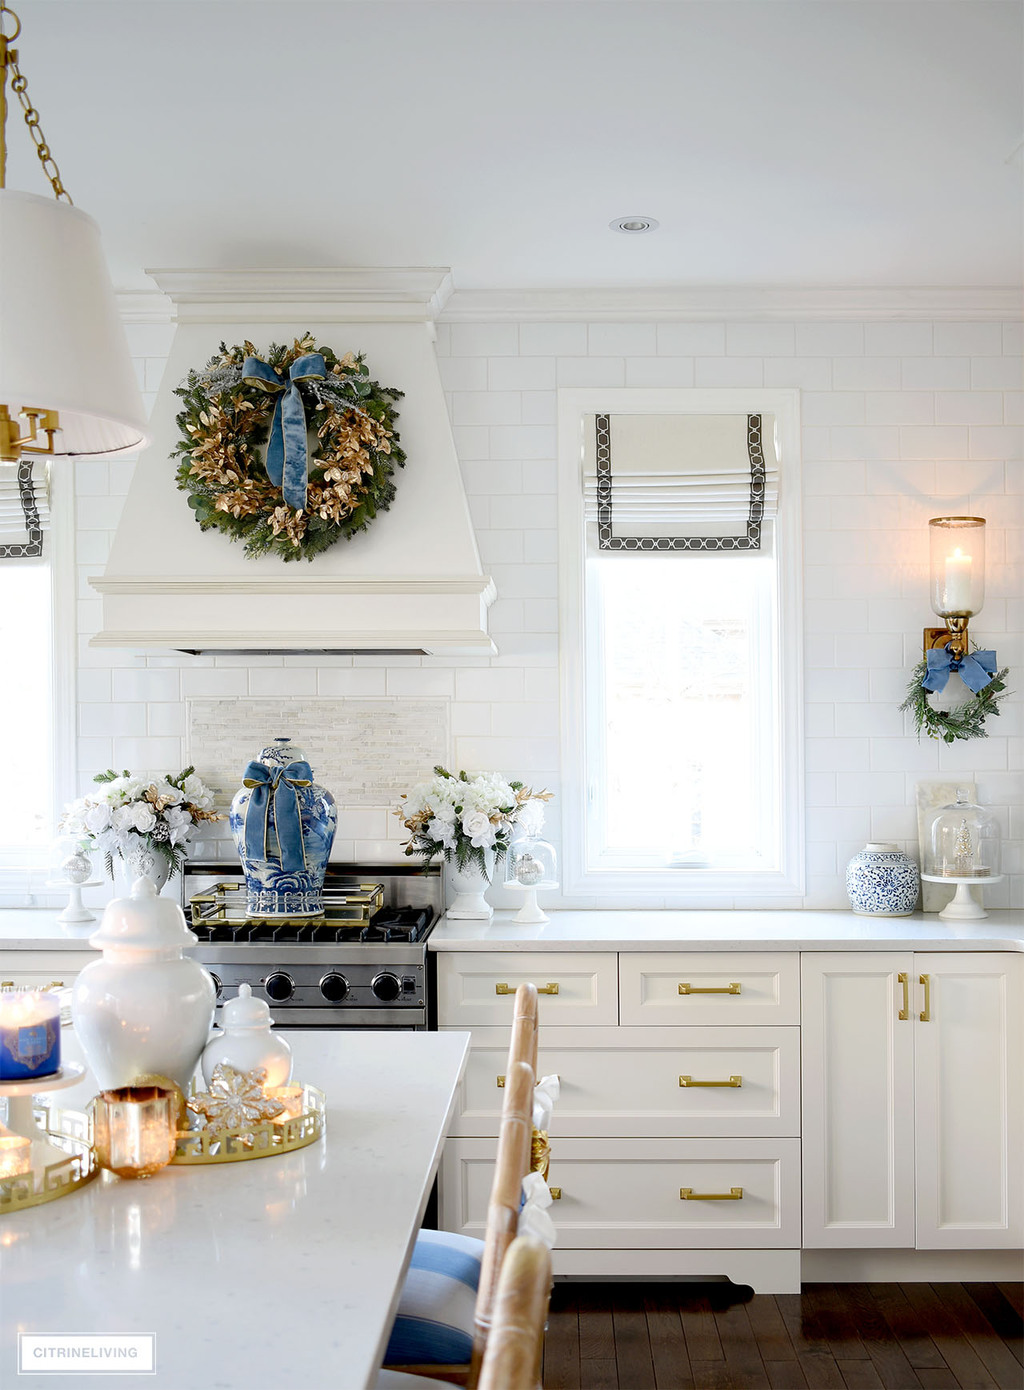 https://citrineliving.com/wp-content/uploads/2021/11/christmas-kitchen-decor-wreath-gold-blue-accessories.jpg